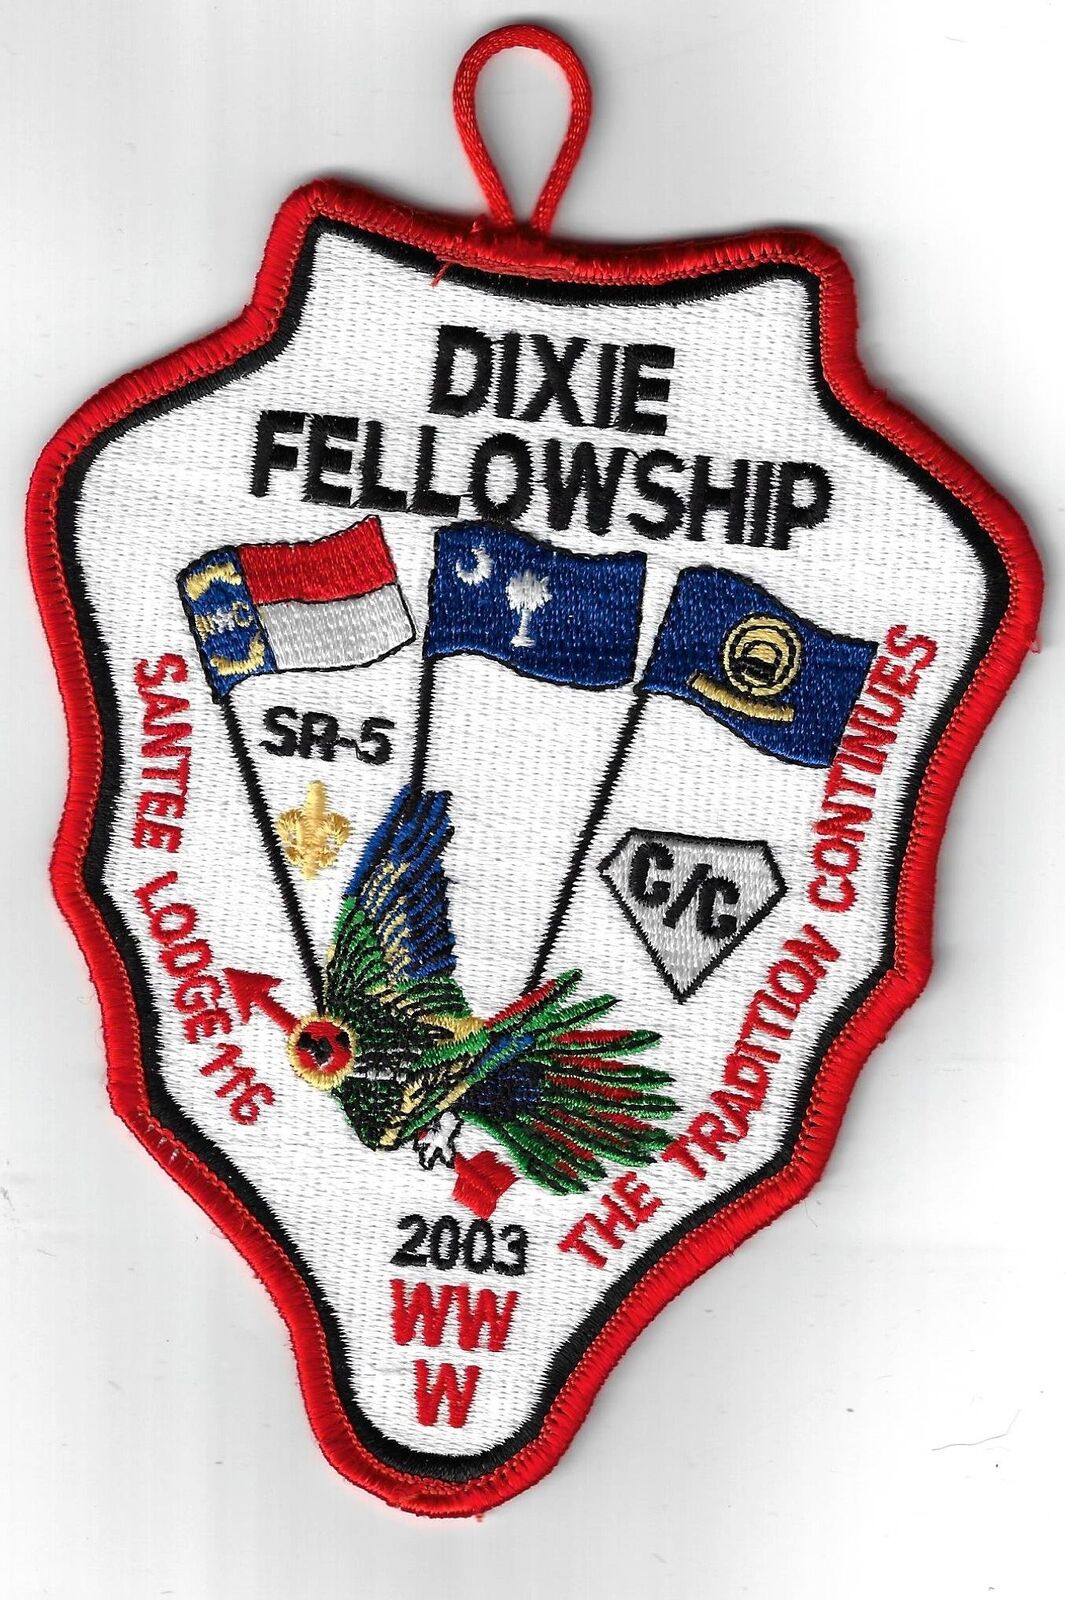 OA 2003 Dixie Fellowship Patch Santee 116 Host Camp Coker